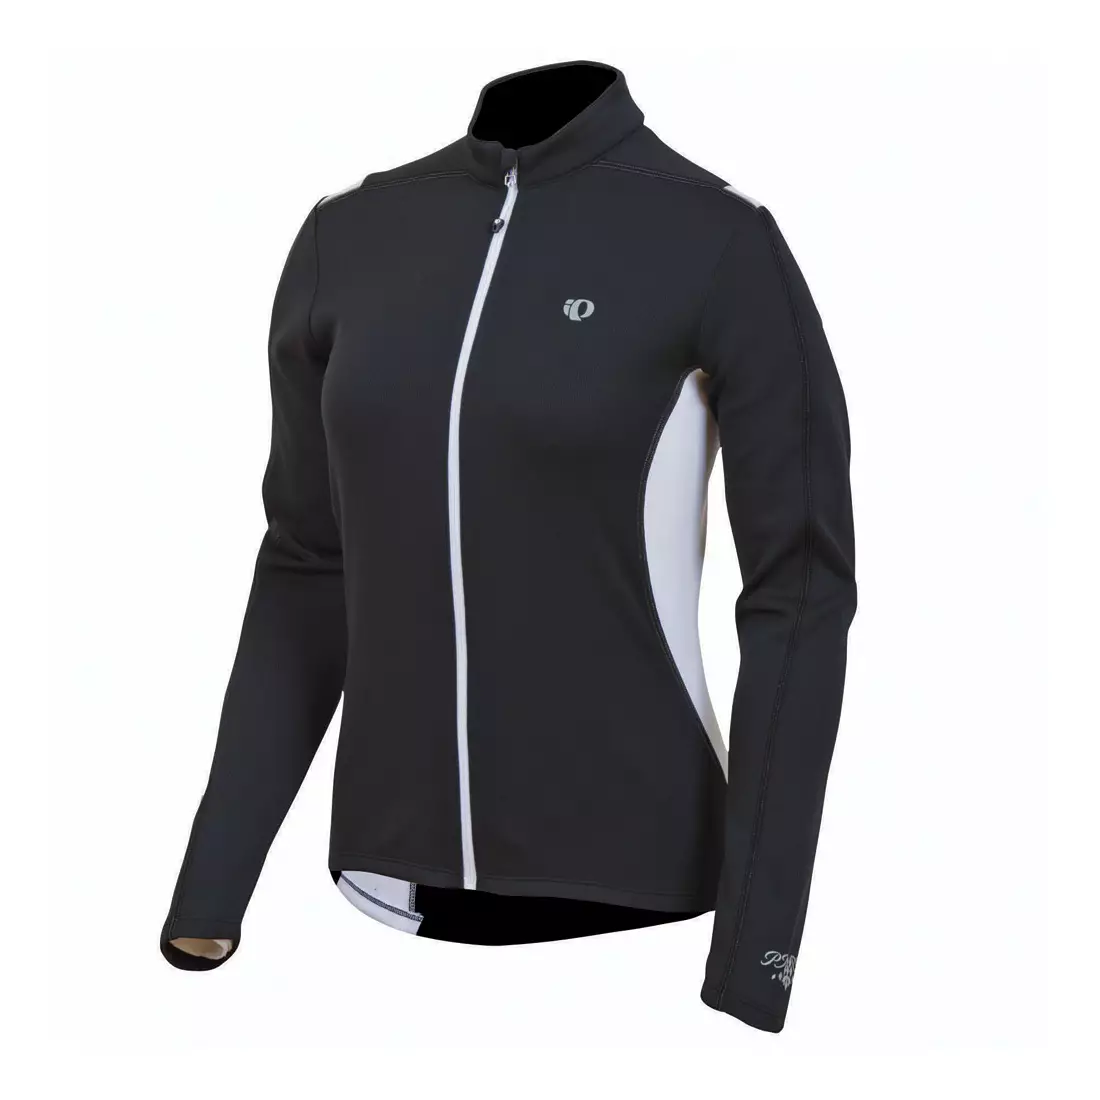 PEARL IZUMI - W's Sugar Thermal Jersey 11221235-021 - Damen-Radsport-Sweatshirt, Farbe: Schwarz